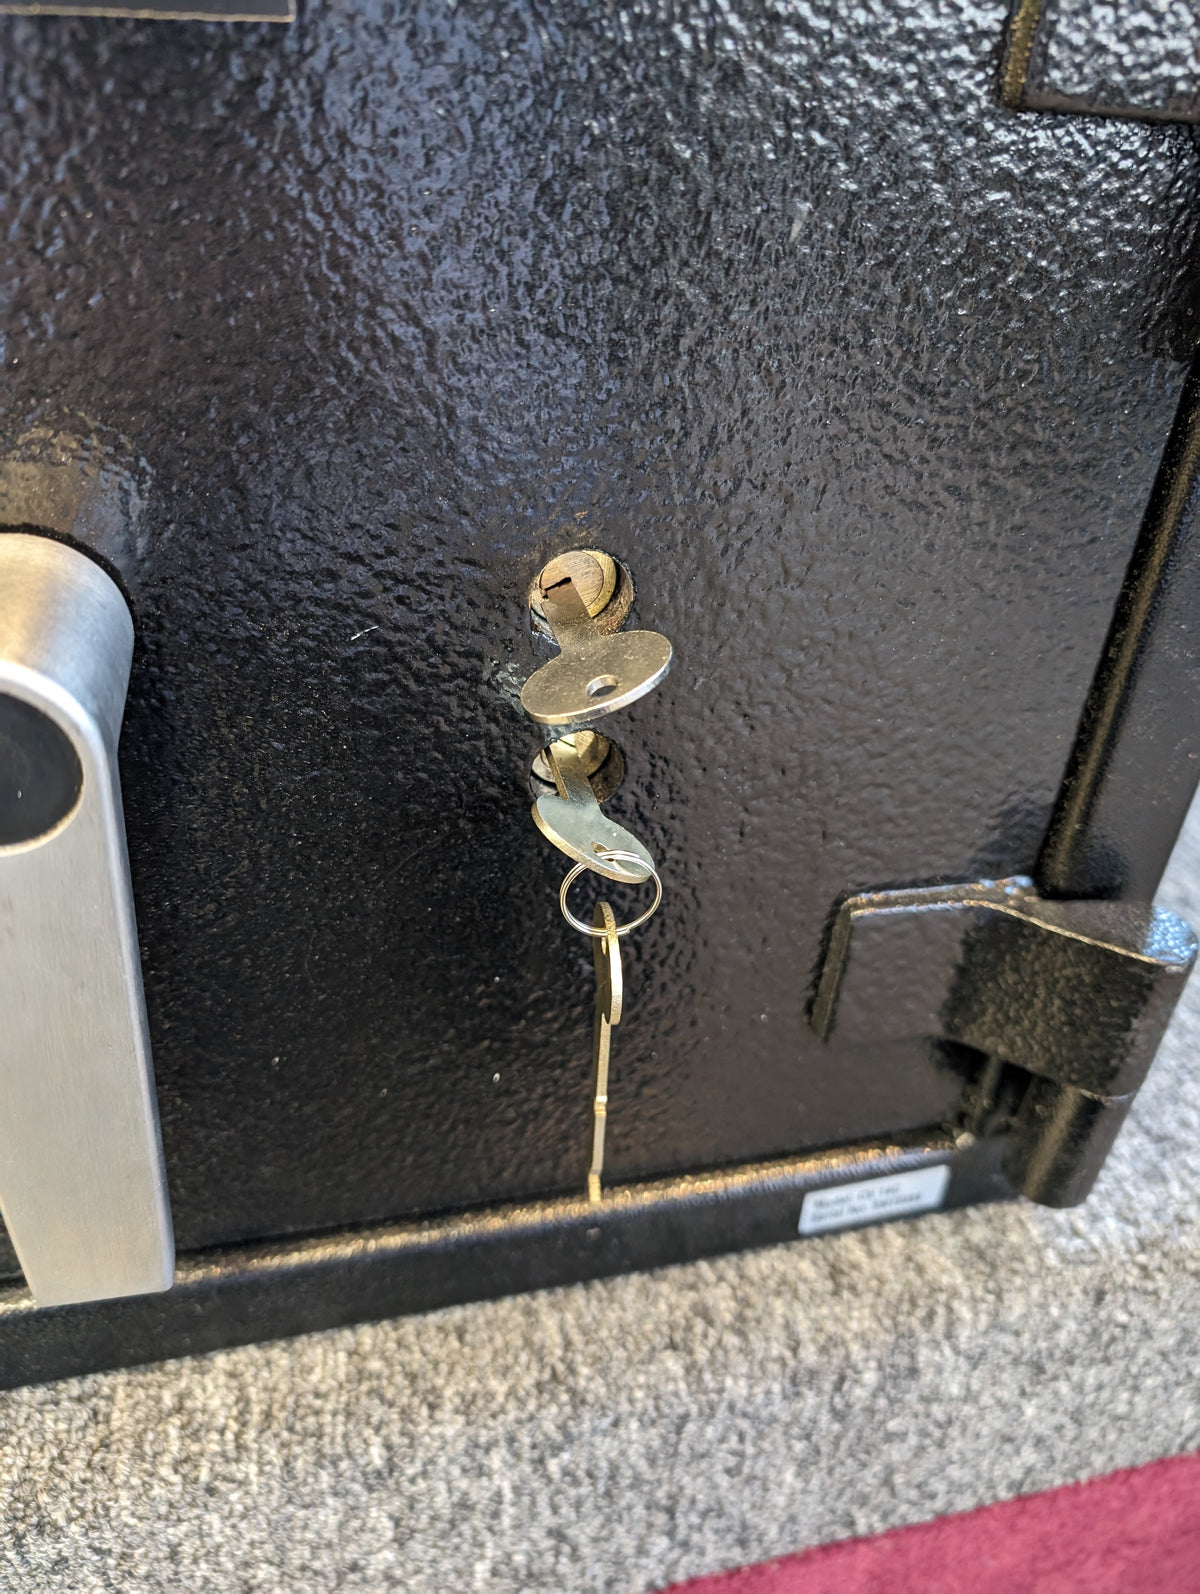 Hayman CV-14-KK Scratch and Dent key lock